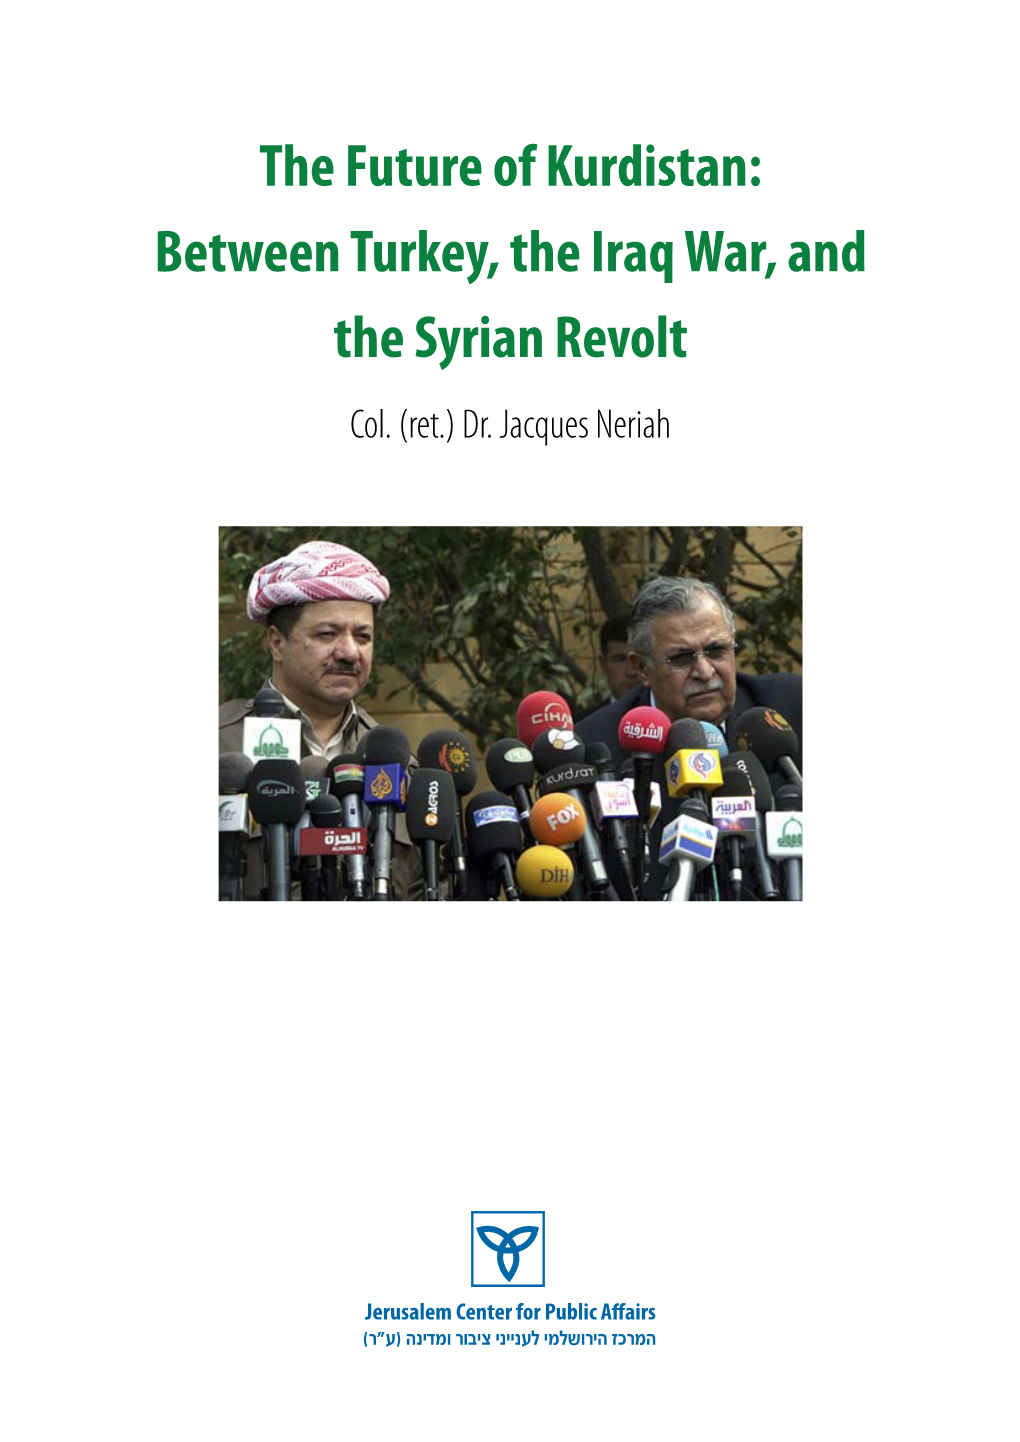 The Future of Kurdistan: Between Turkey, the Iraq War, and the Syrian Revolt Col